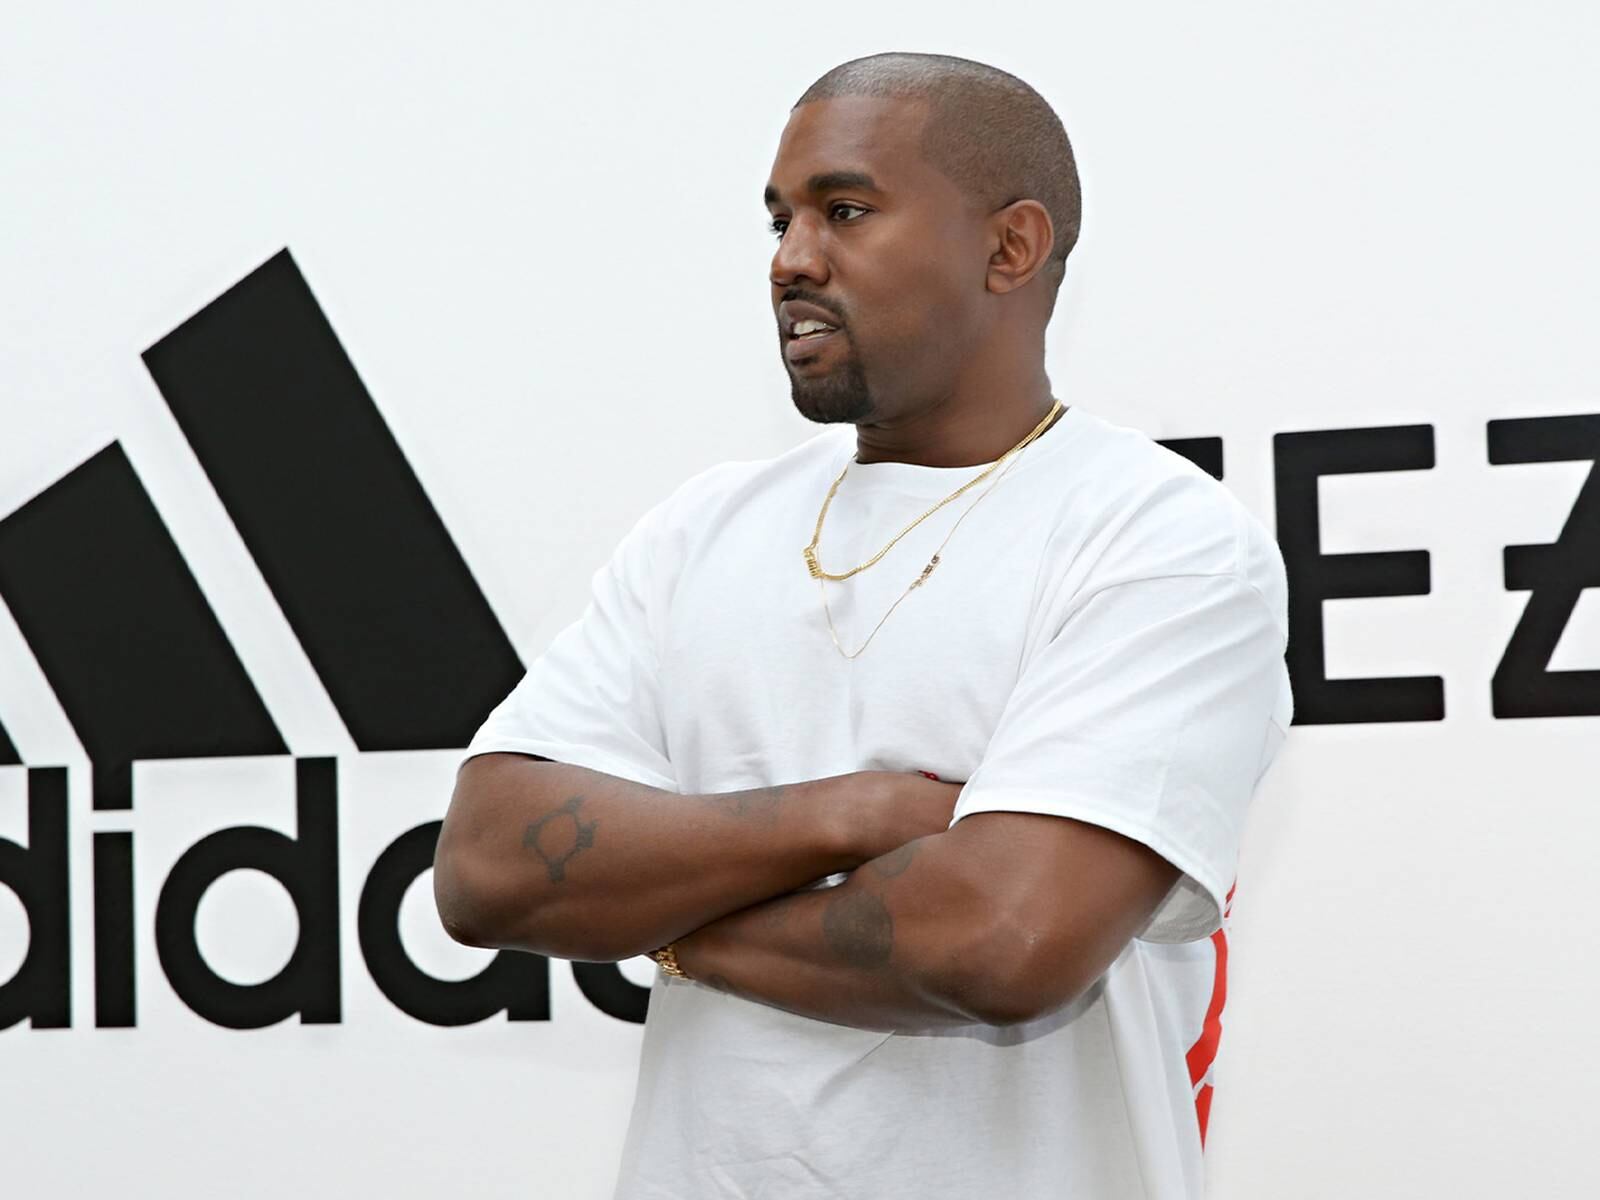 leak Rafflesia Arnoldi switch Adidas Ends Yeezy Partnership | BoF